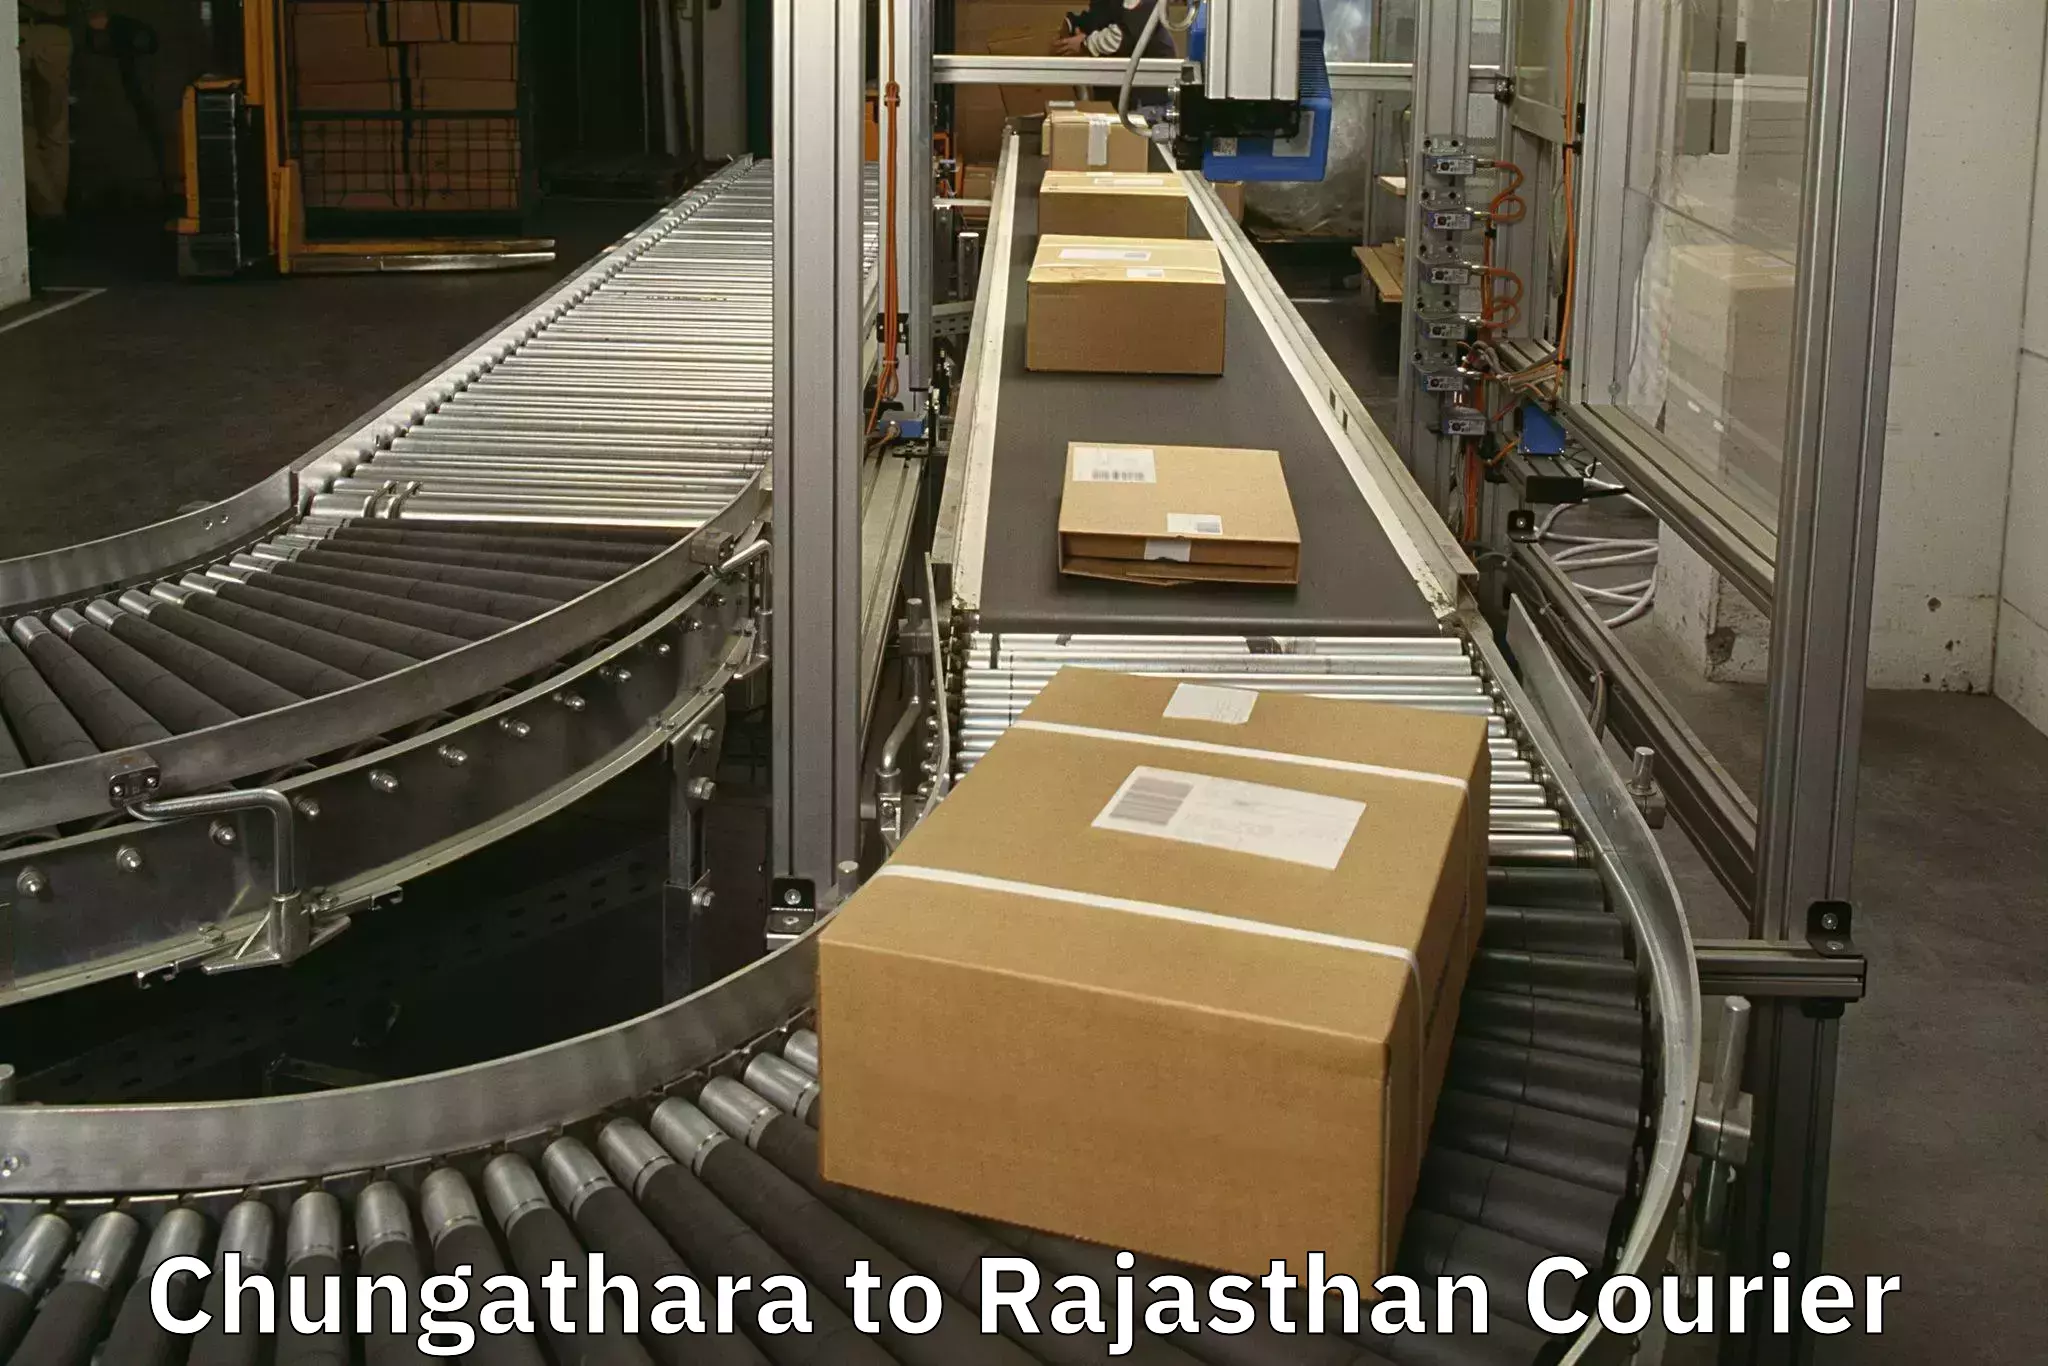 Baggage transport technology Chungathara to Rajasthan